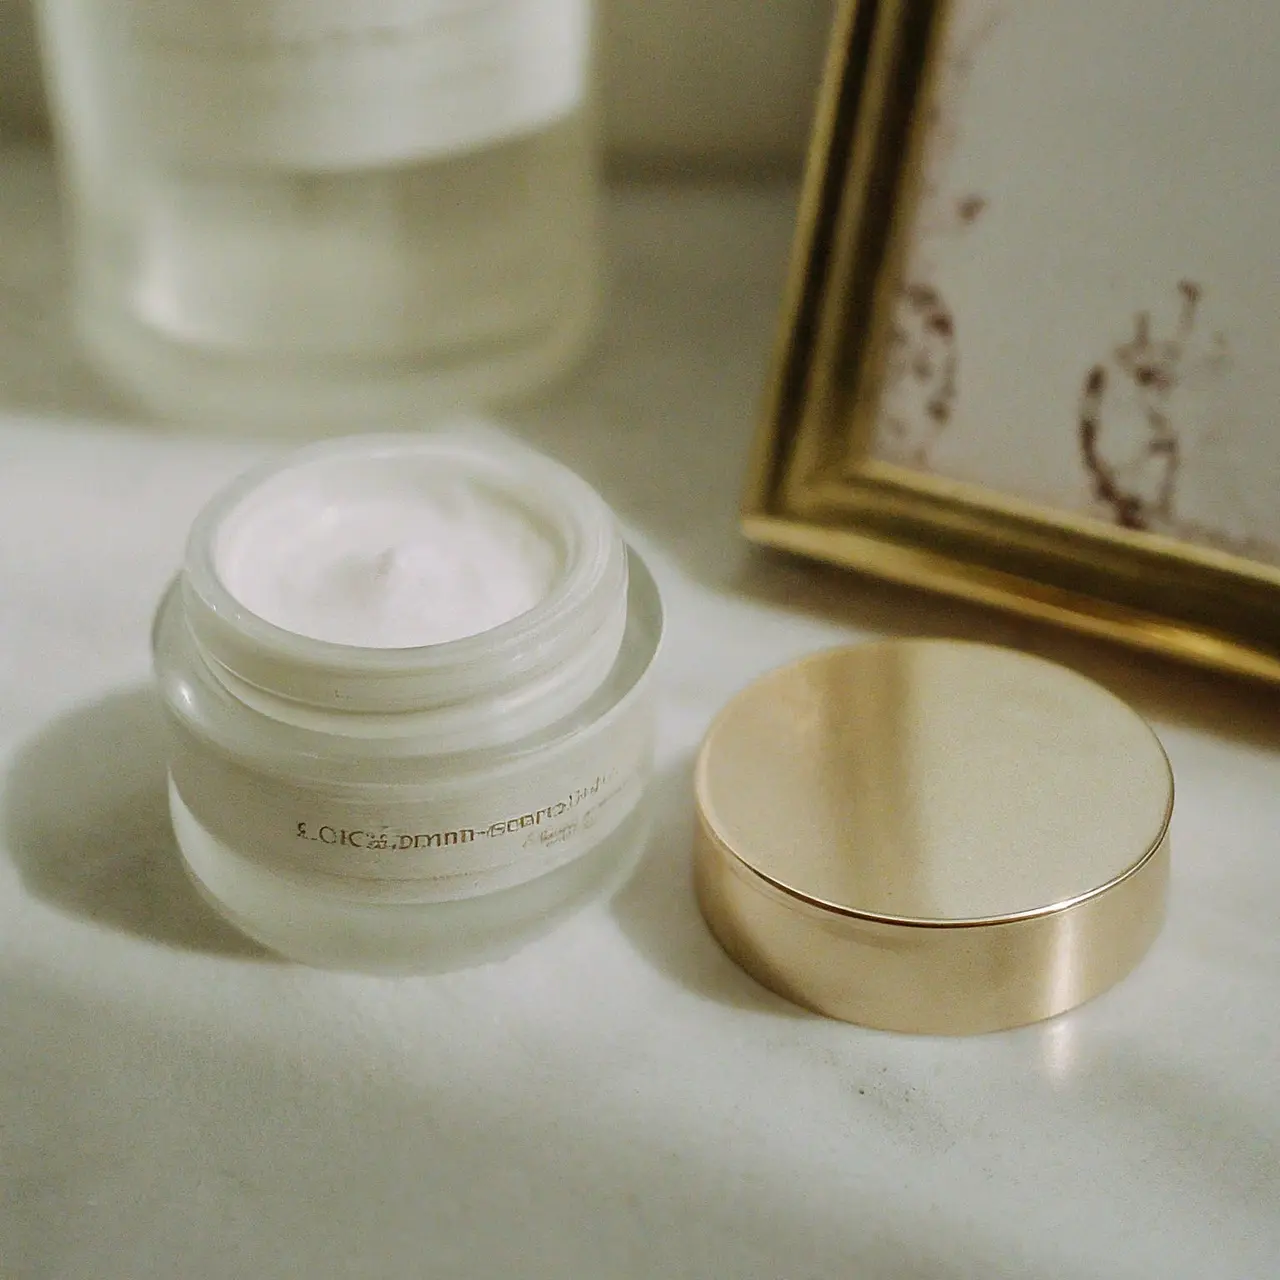 A luxurious jar of organic night cream on a vanity. 35mm stock photo